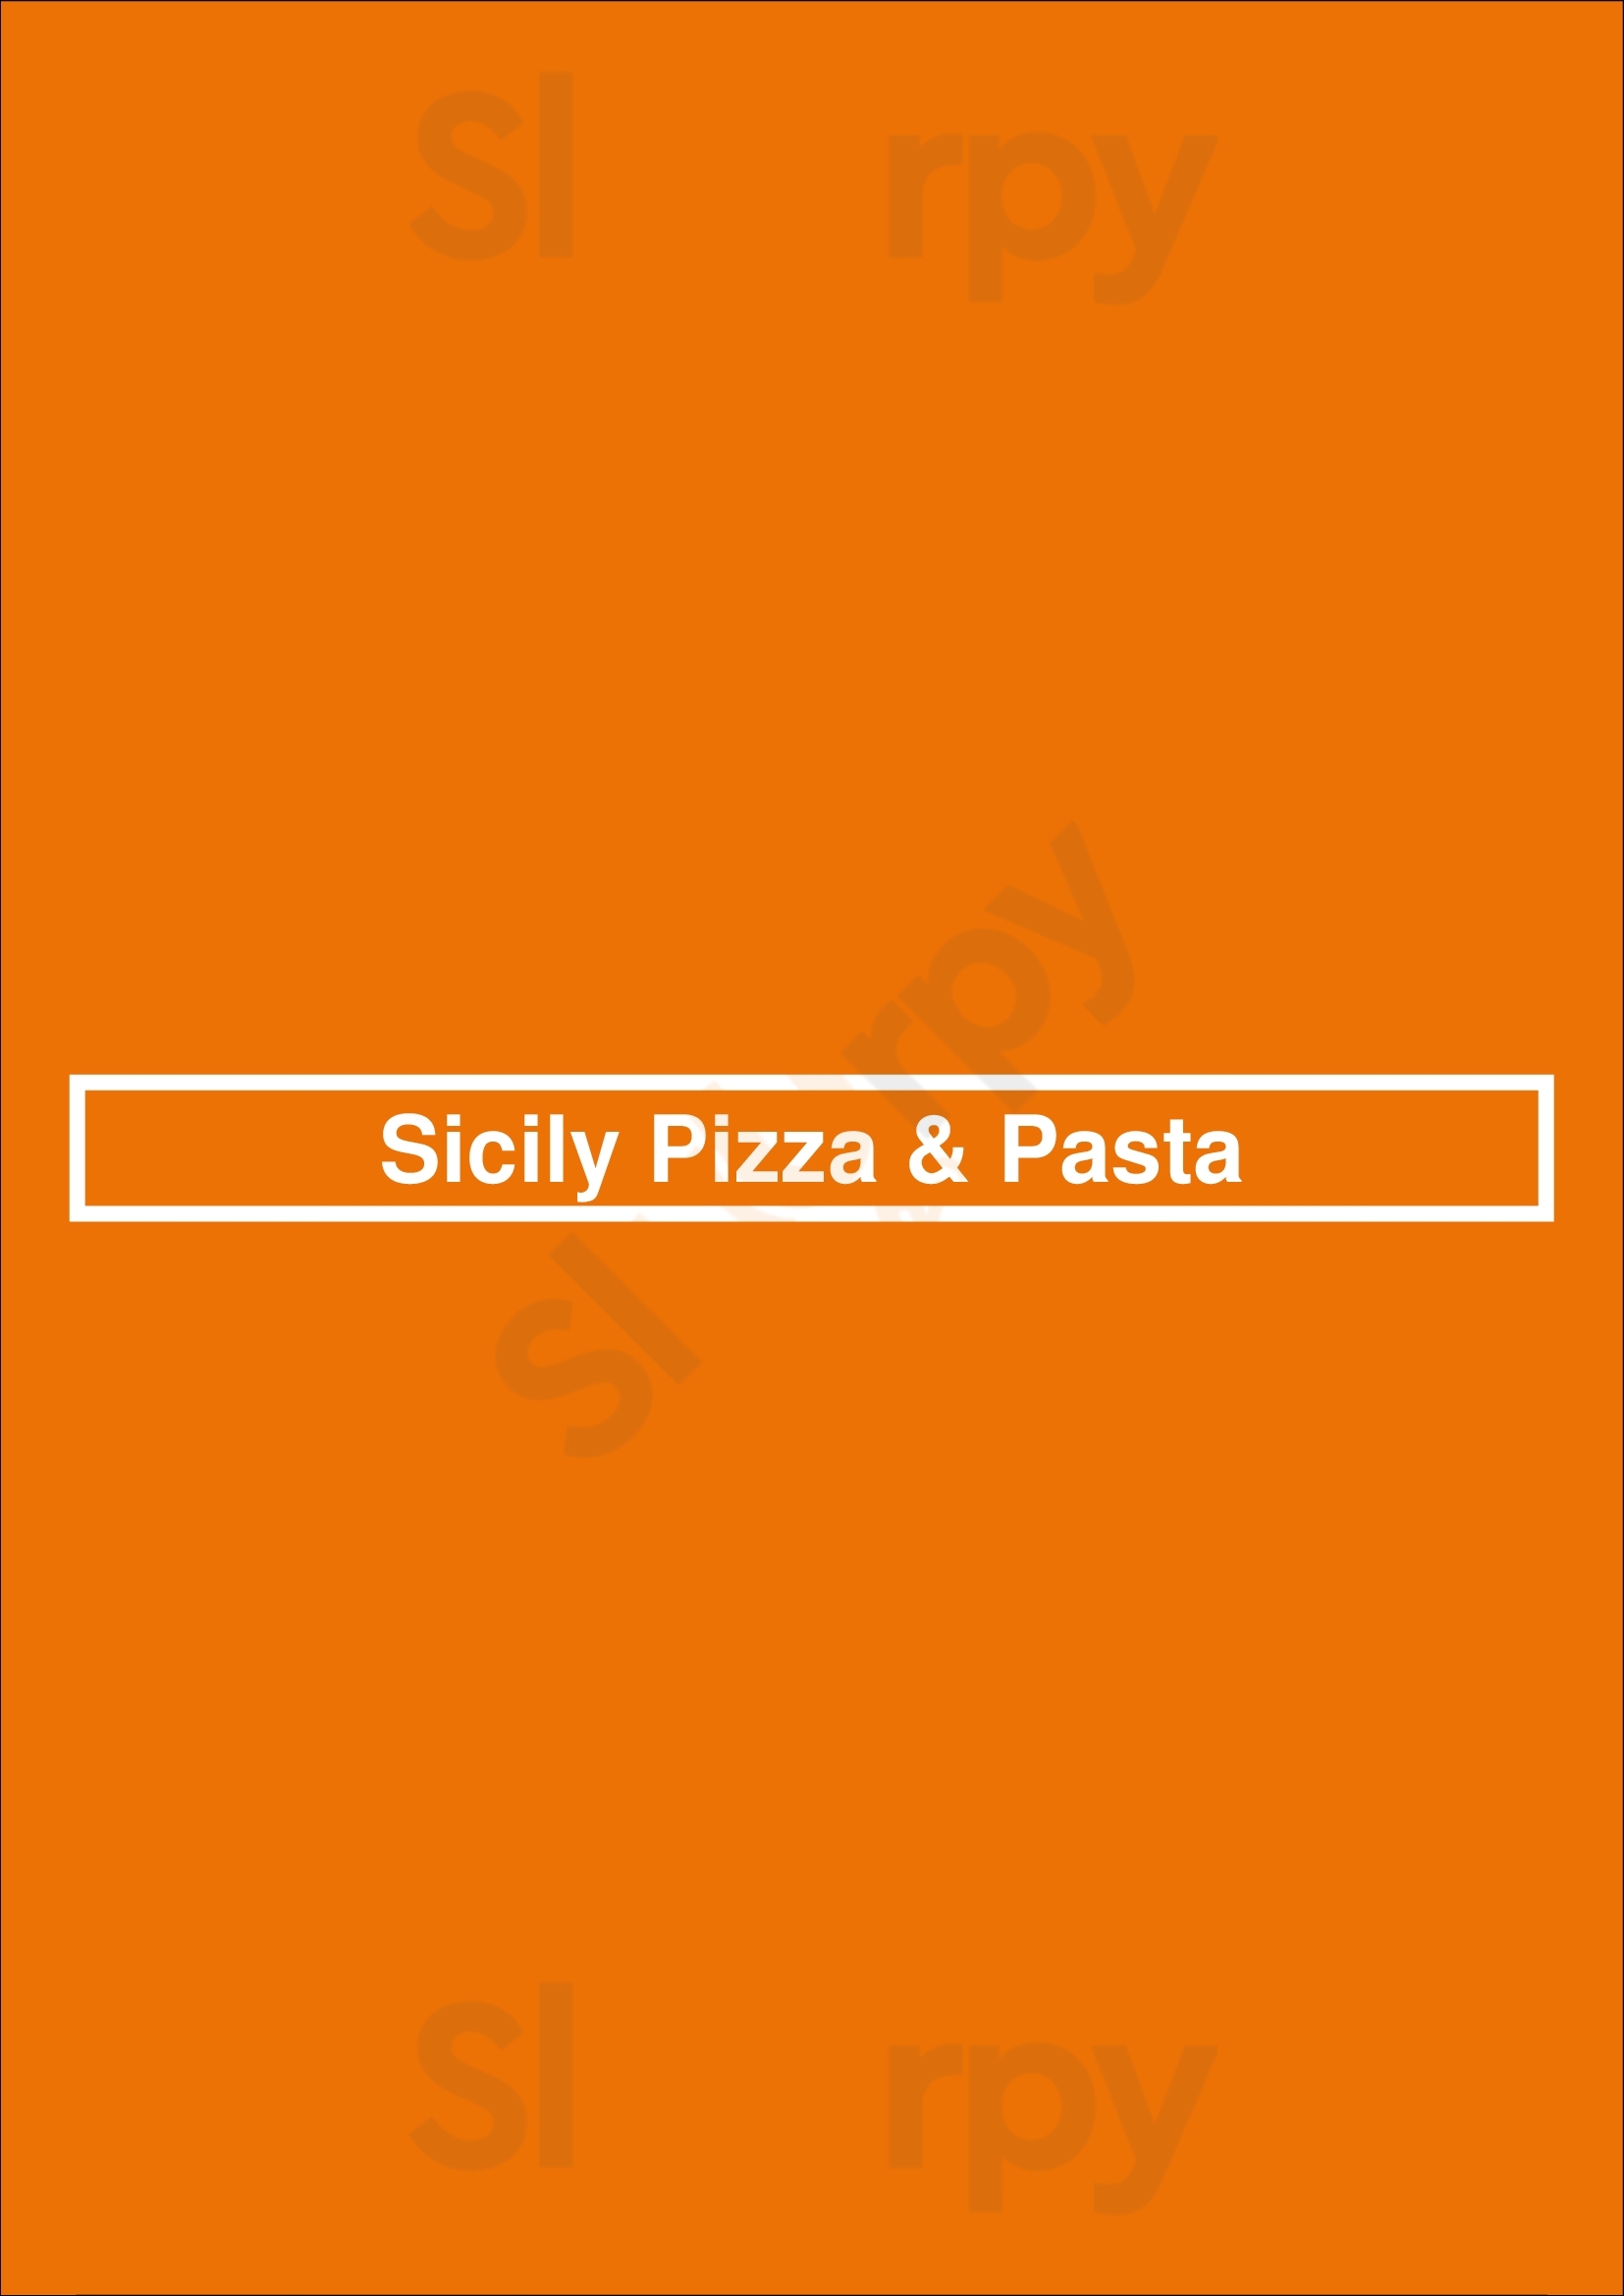 Sicily Pizza & Pasta Houston Menu - 1